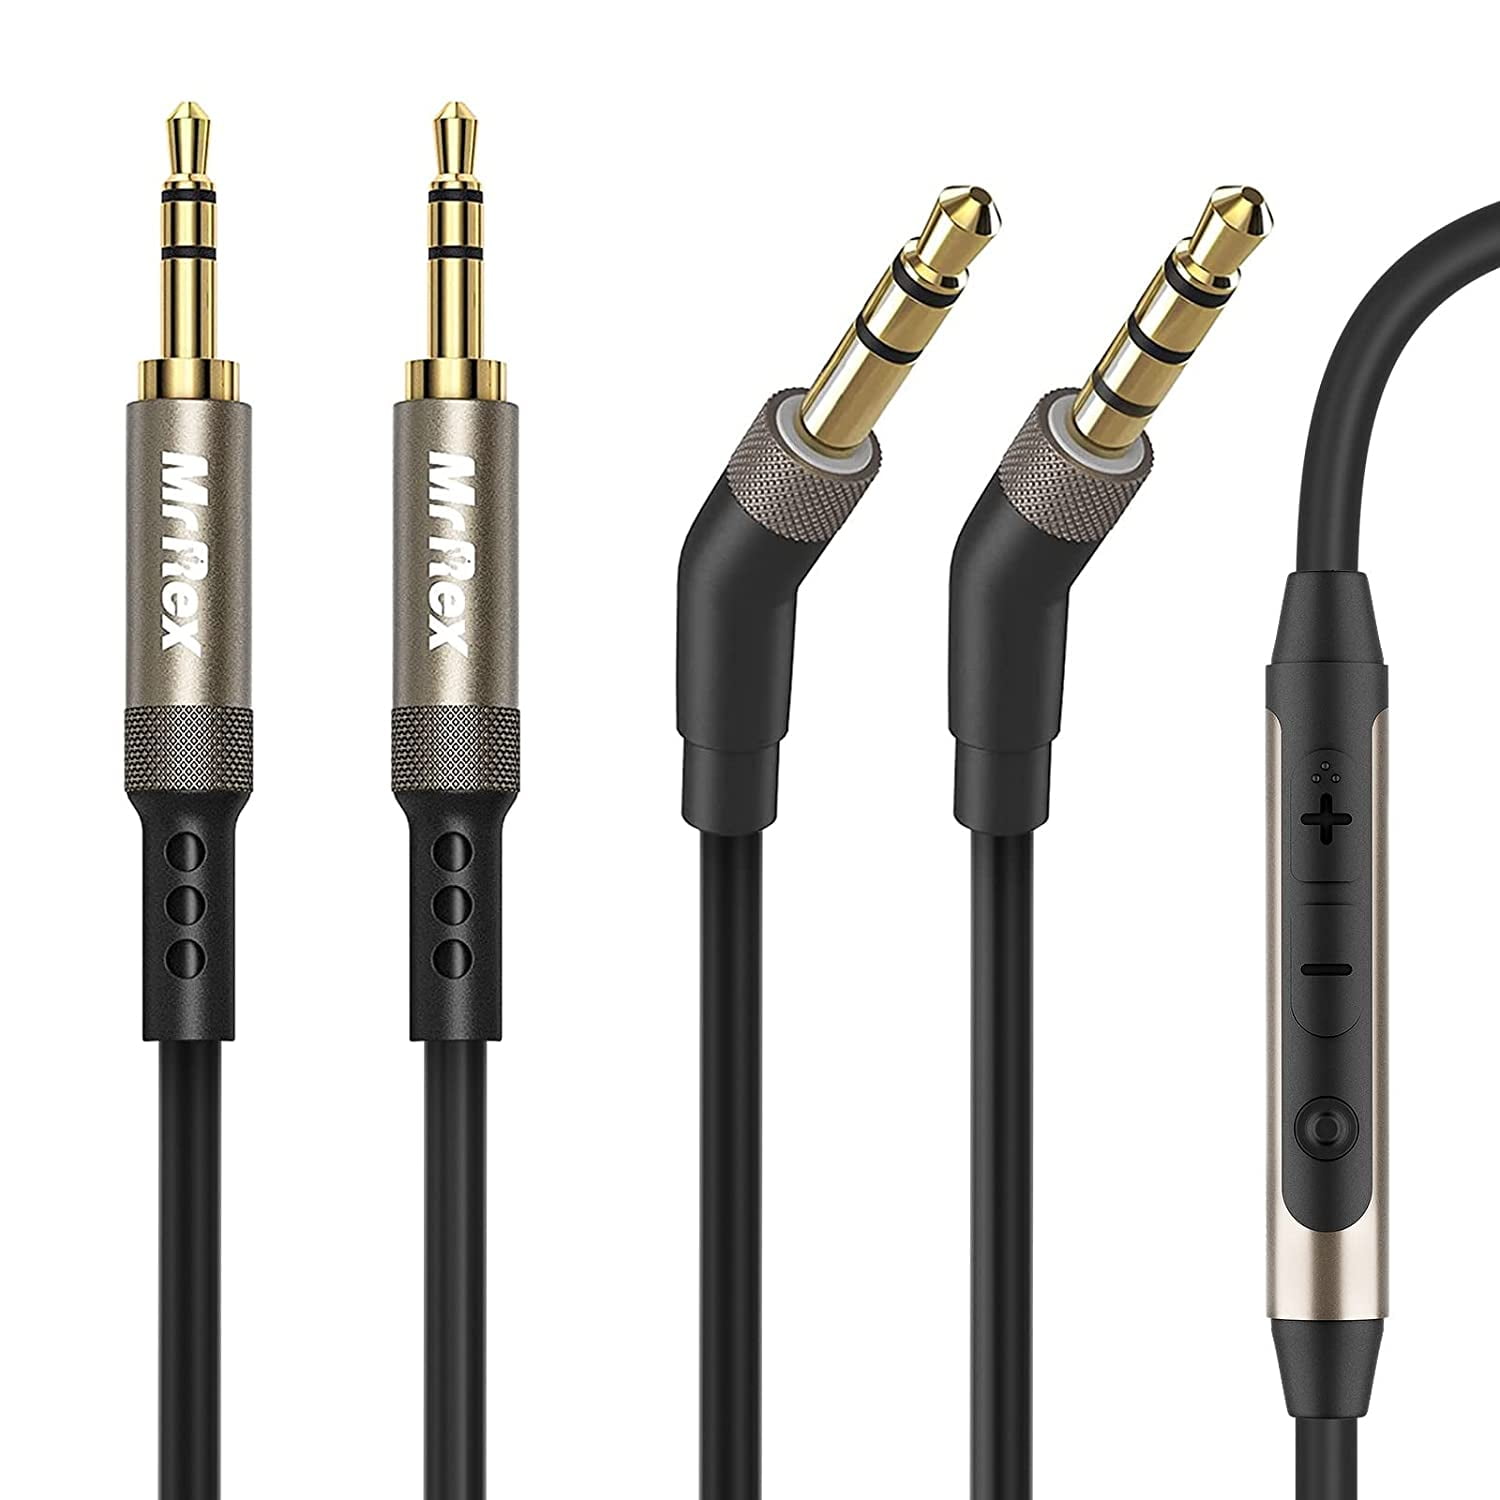 2.5mm to 3.5mm Audio Cable Cord for Bose QC25 QC35II QC35 QC45 Soundlink Headphone, E45BT E65BTNC Live - Walmart.com